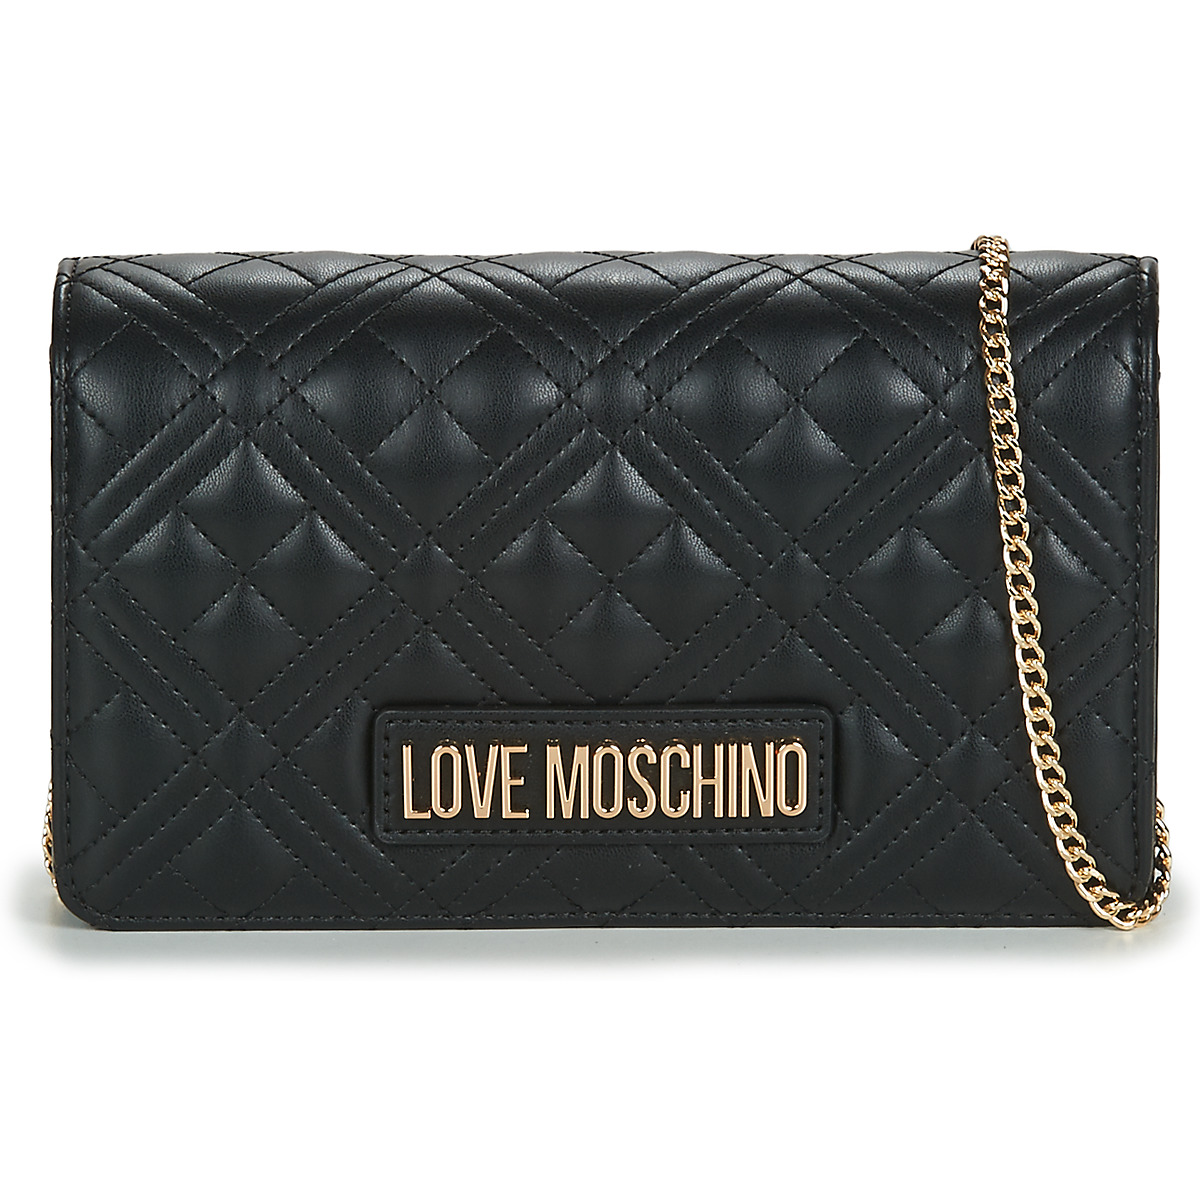 Bags Women Shoulder bags Love Moschino JC4079PP1E Black